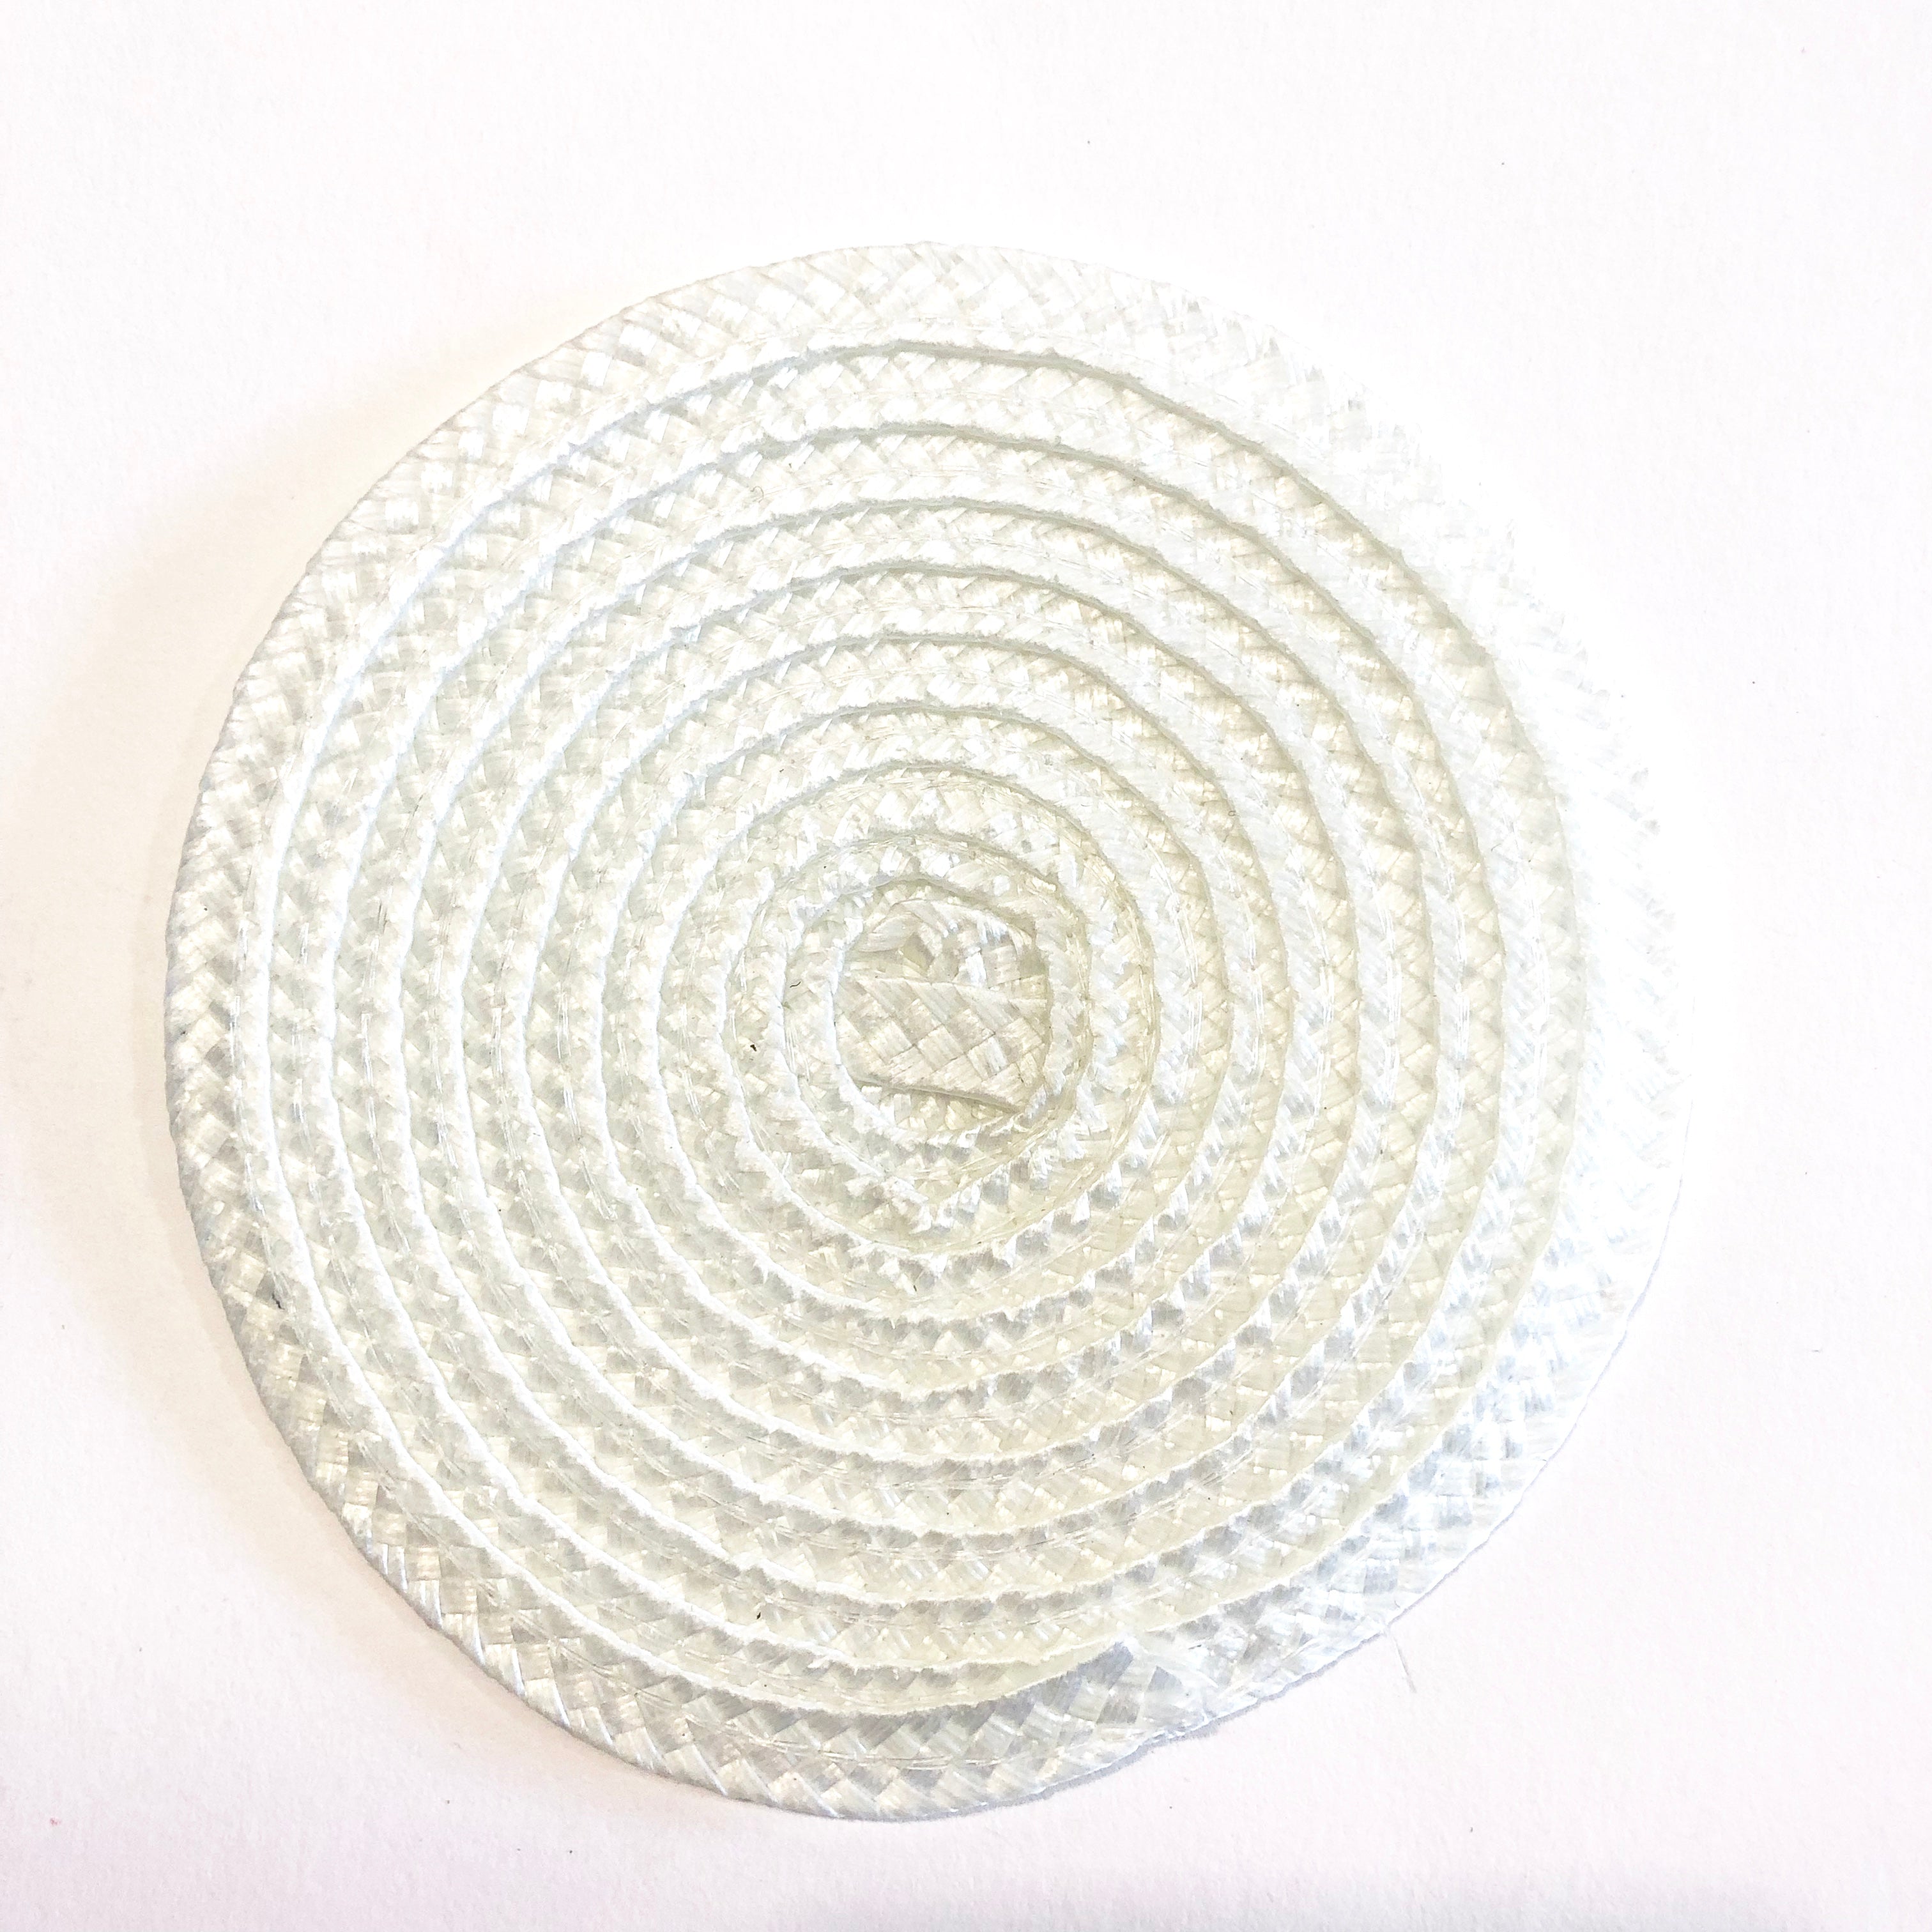 Polybraid 100mm Round Disc Millinery Fascinator Base - White